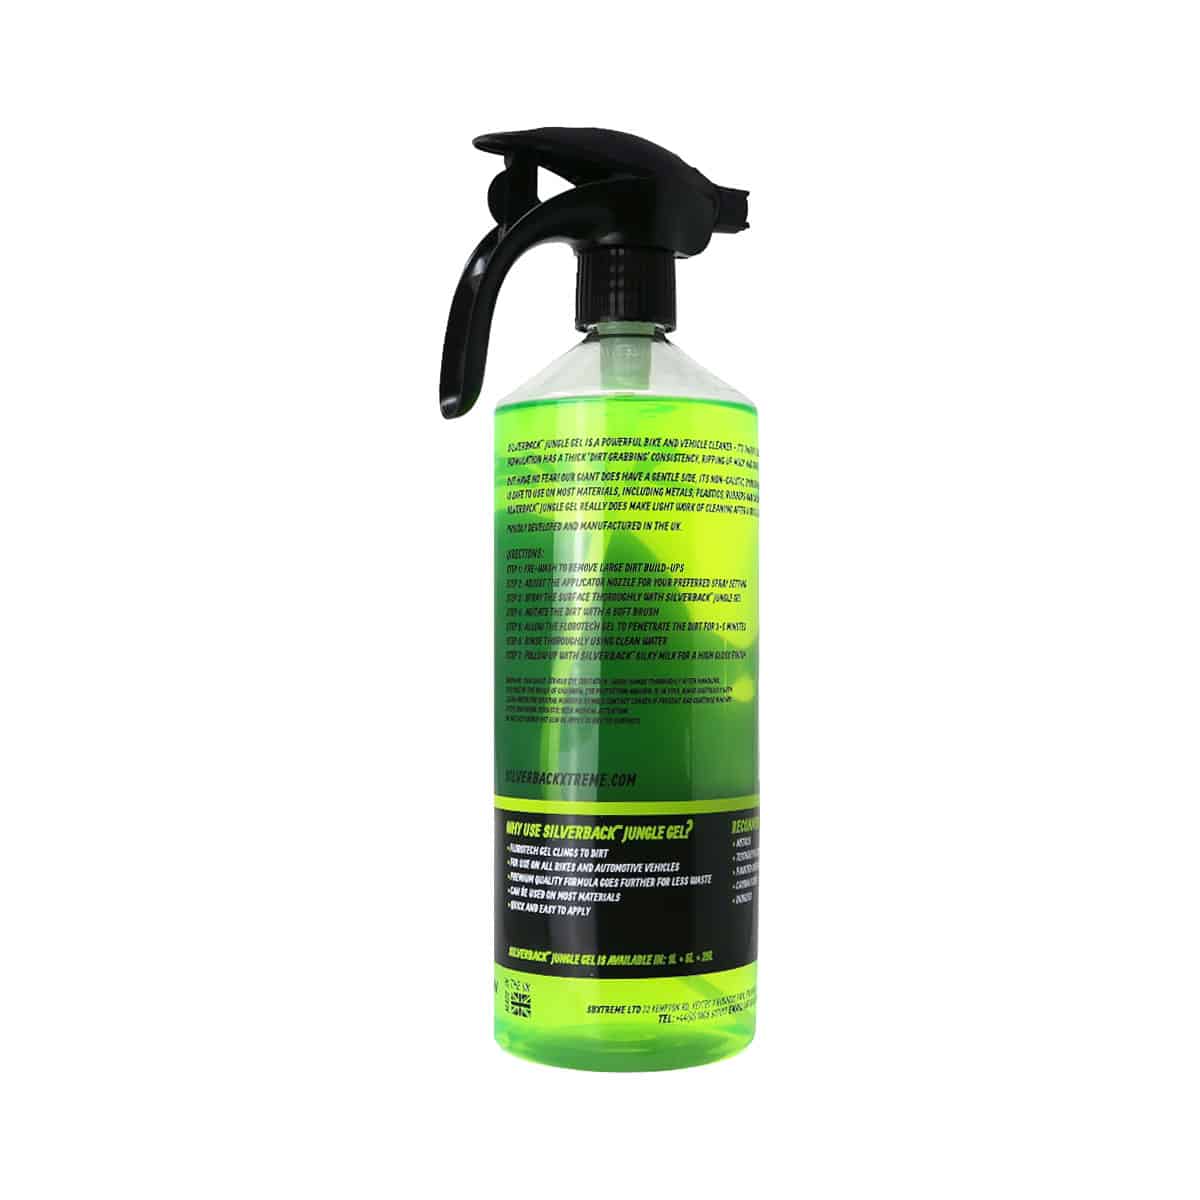 Silverback Jungle Gel: Shift stubborn paintwork & plastics contamination with one spray 2